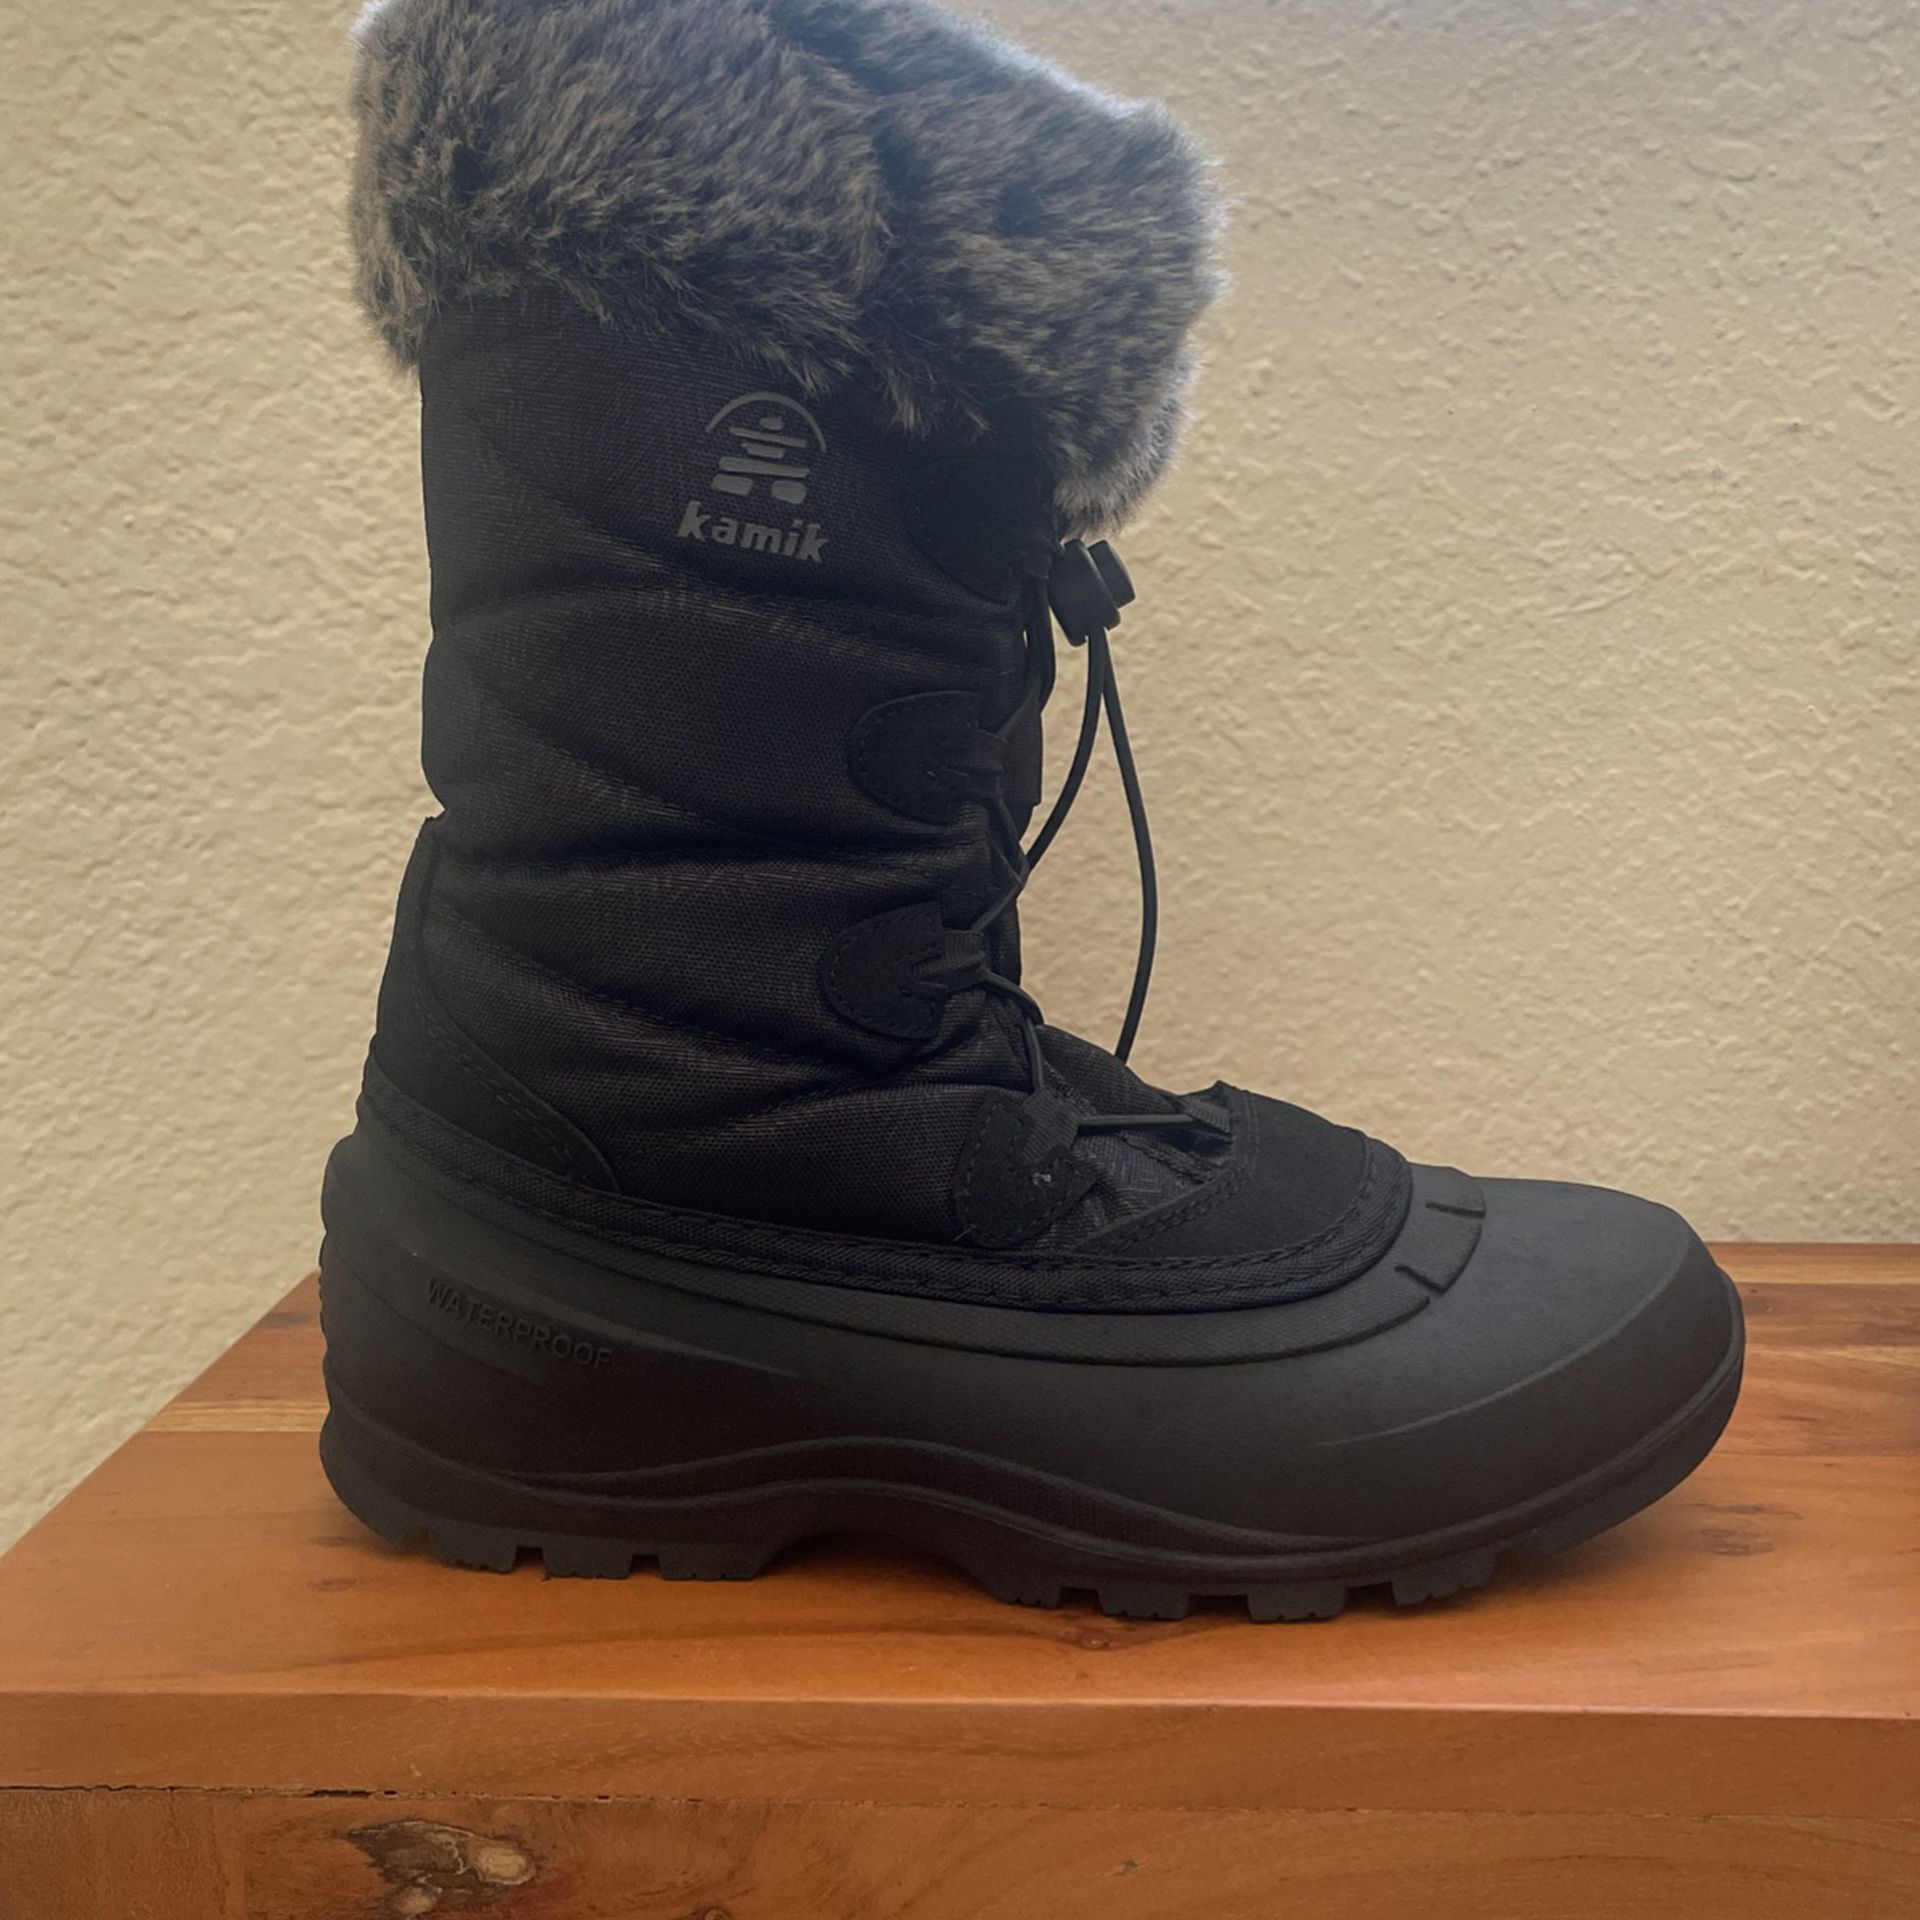 Snow Boots- Women’s Size 8